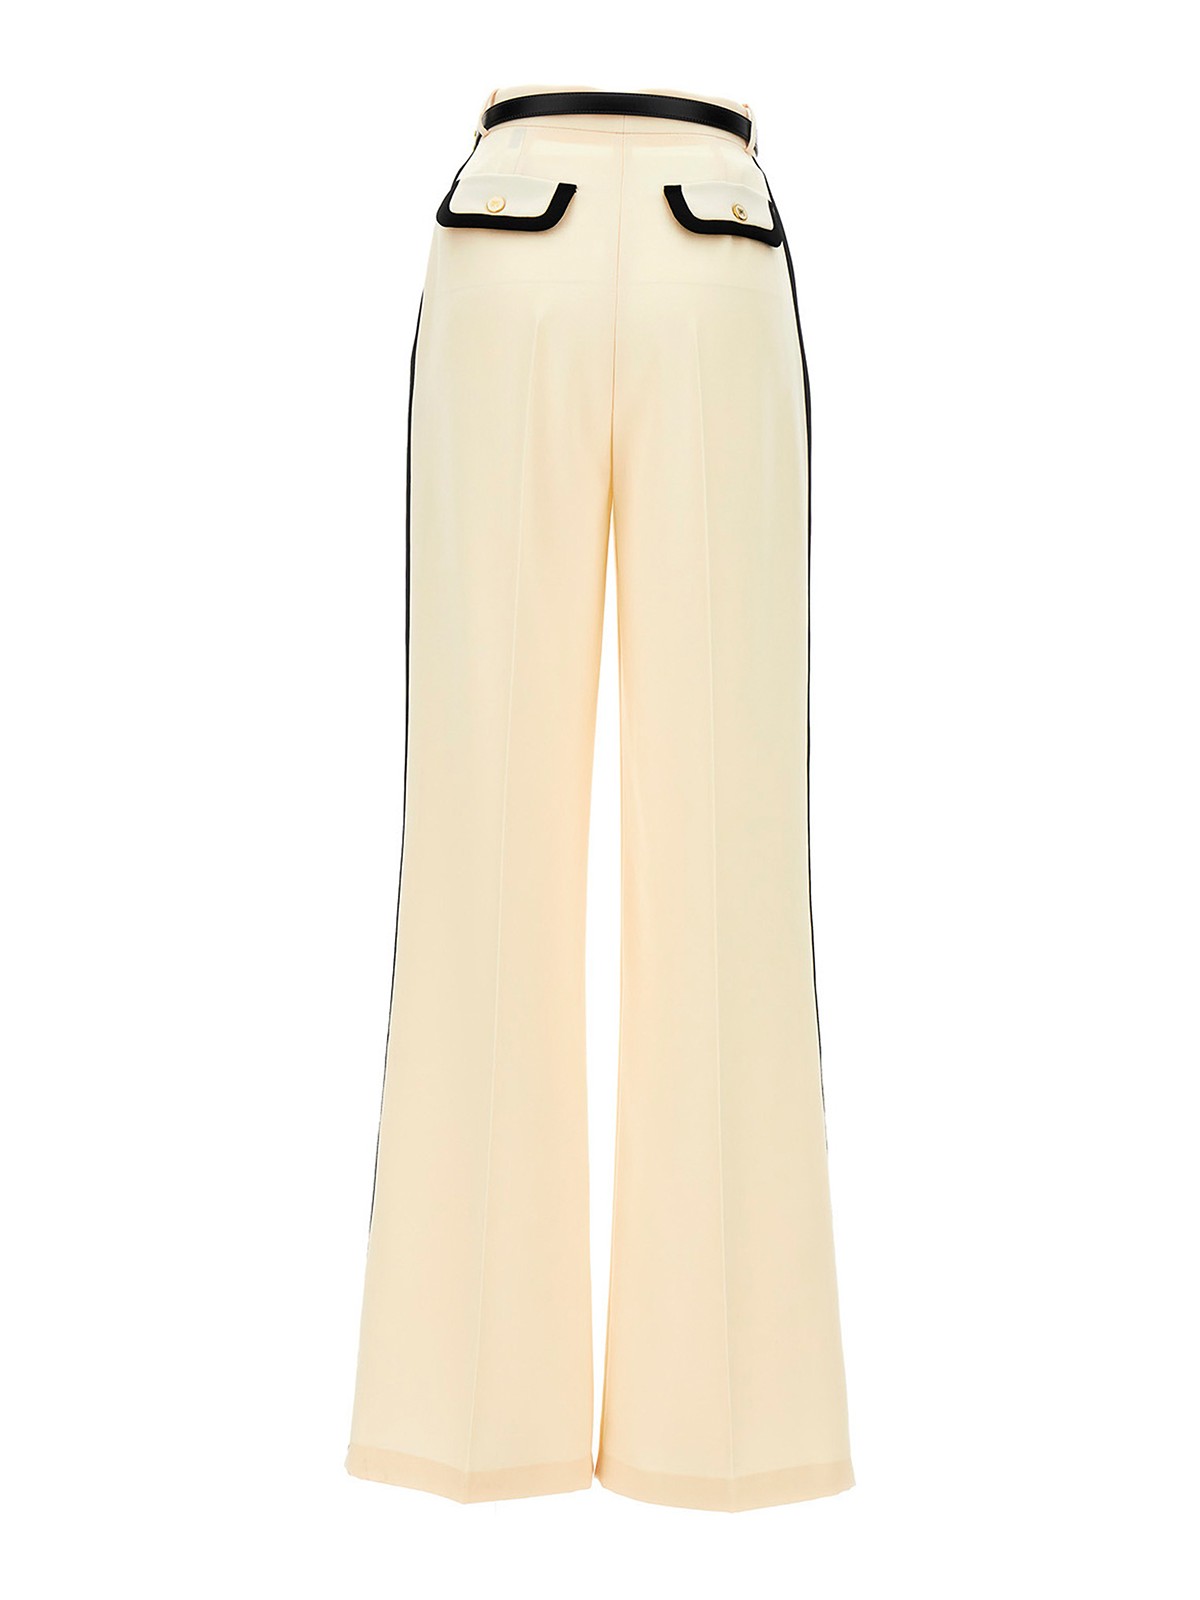 Women Cream Color Twill Culottes Casual Wear Palazzo Pant Belly Dance Satin  S25 | eBay